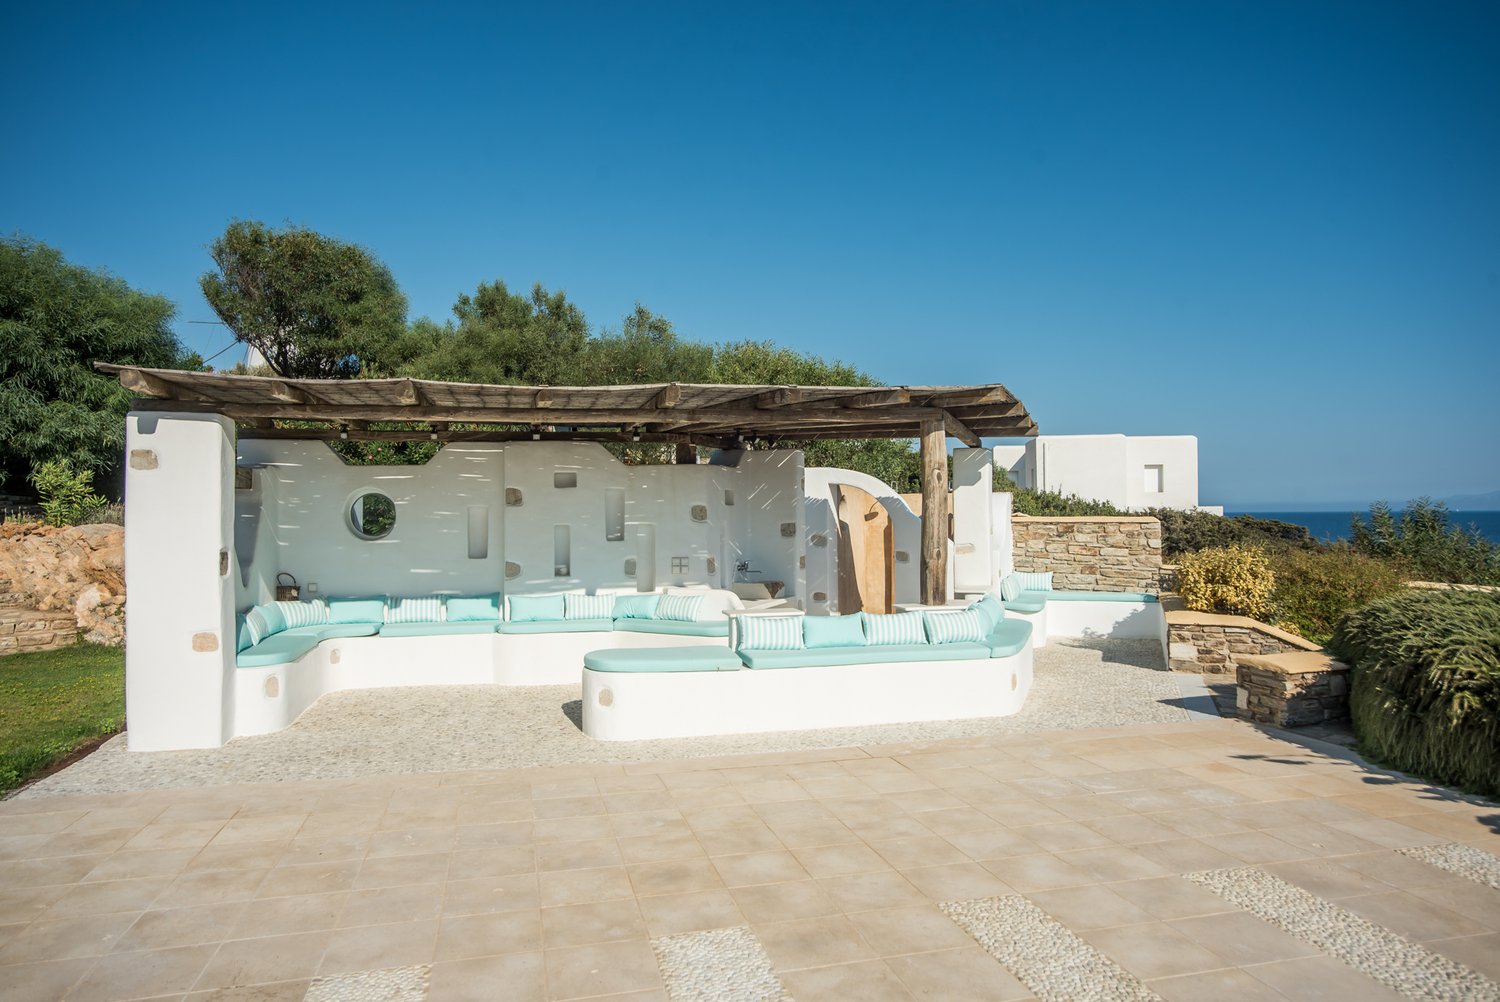 Villa apantima blue lounge terrace